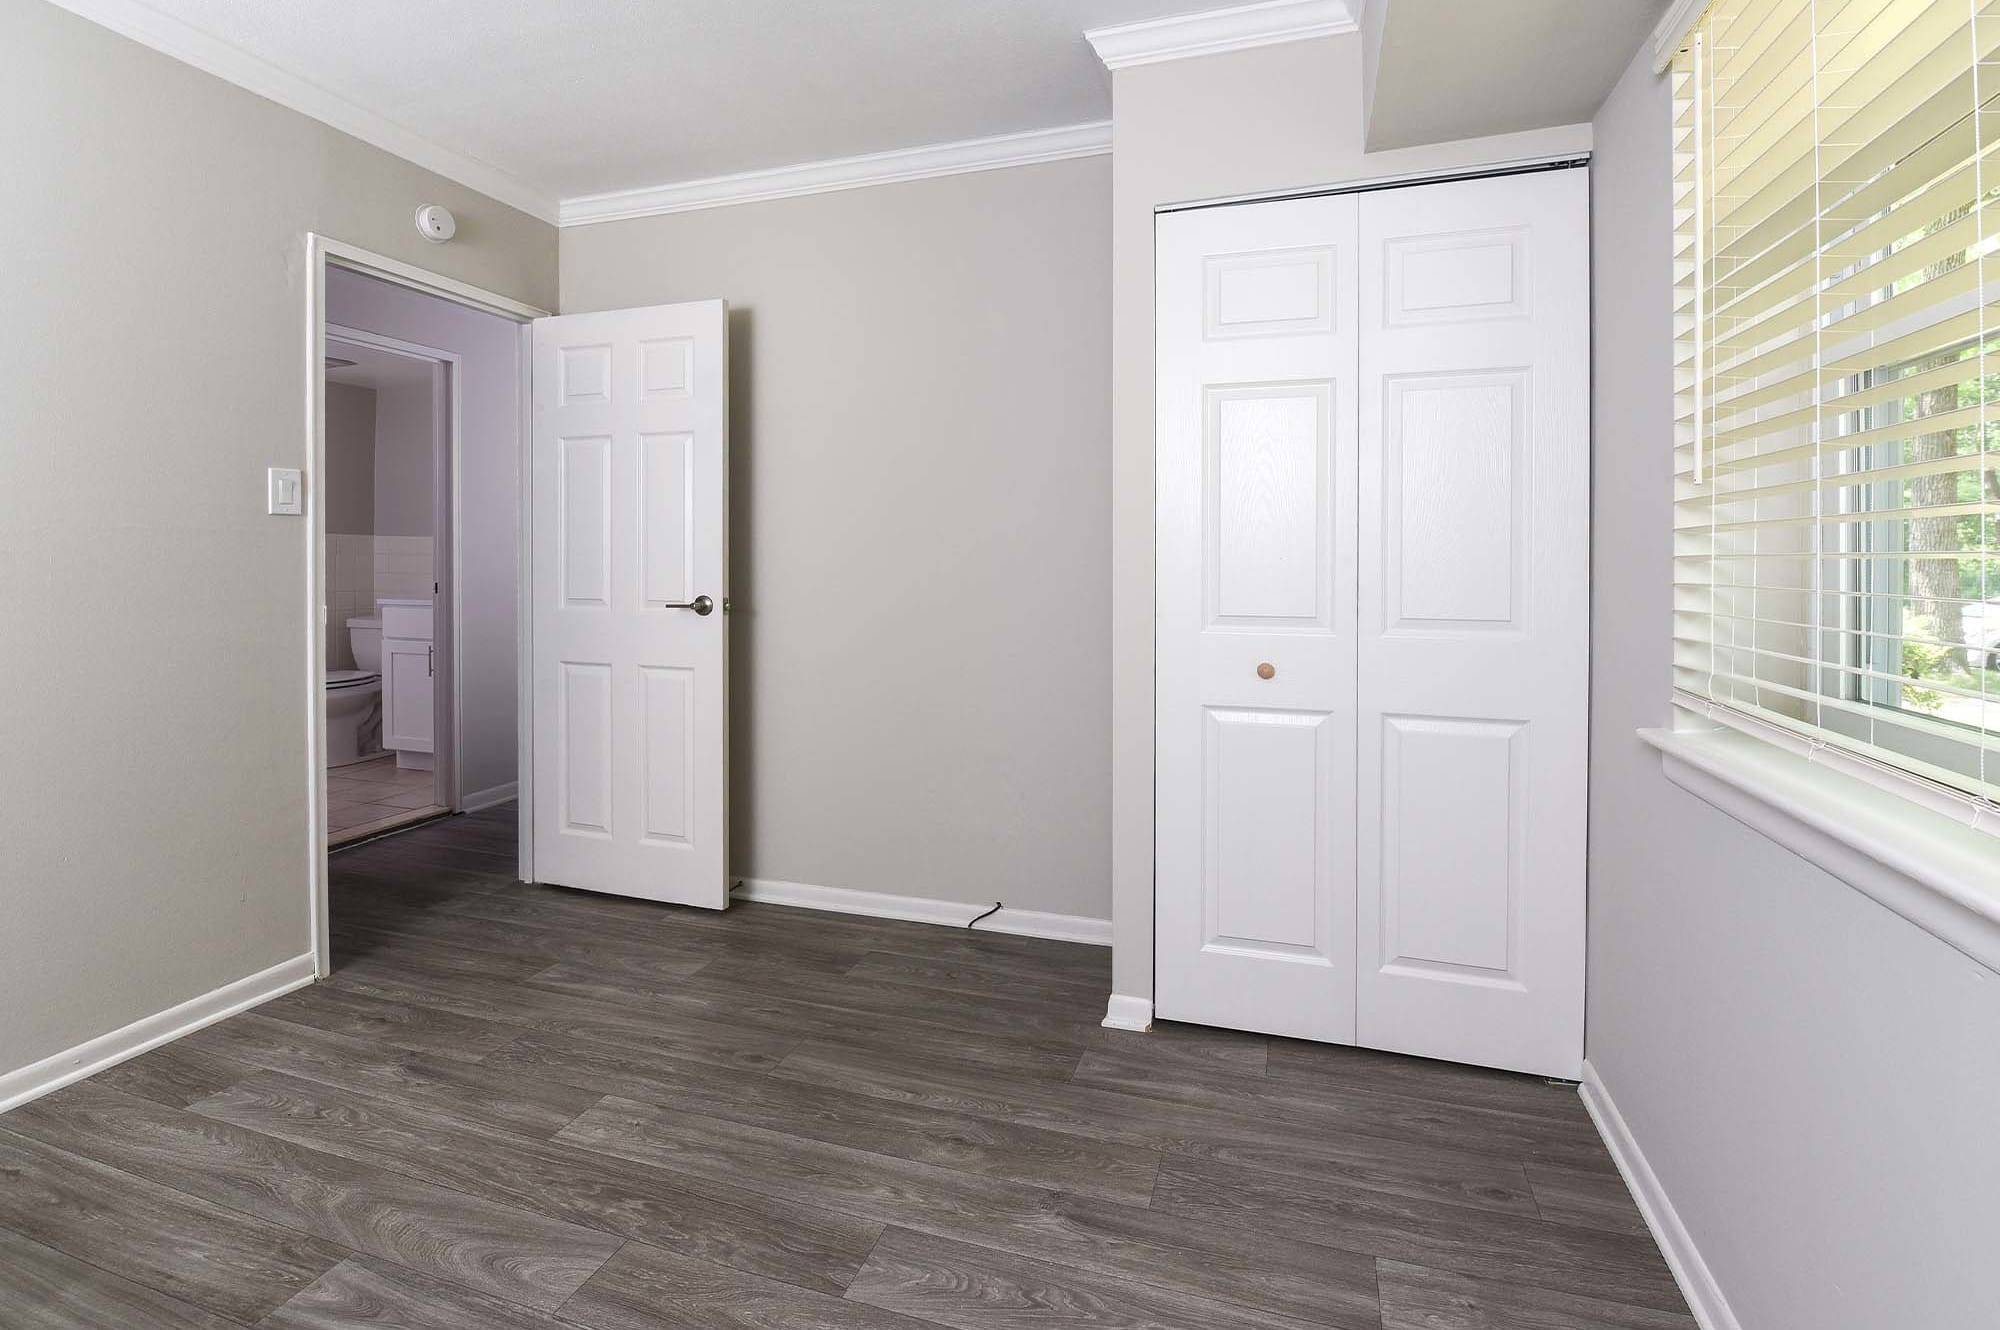 empty bedroom with gray walls dark hardwood like plank flooring at The Nolan, Morrisville, Pennsylvania